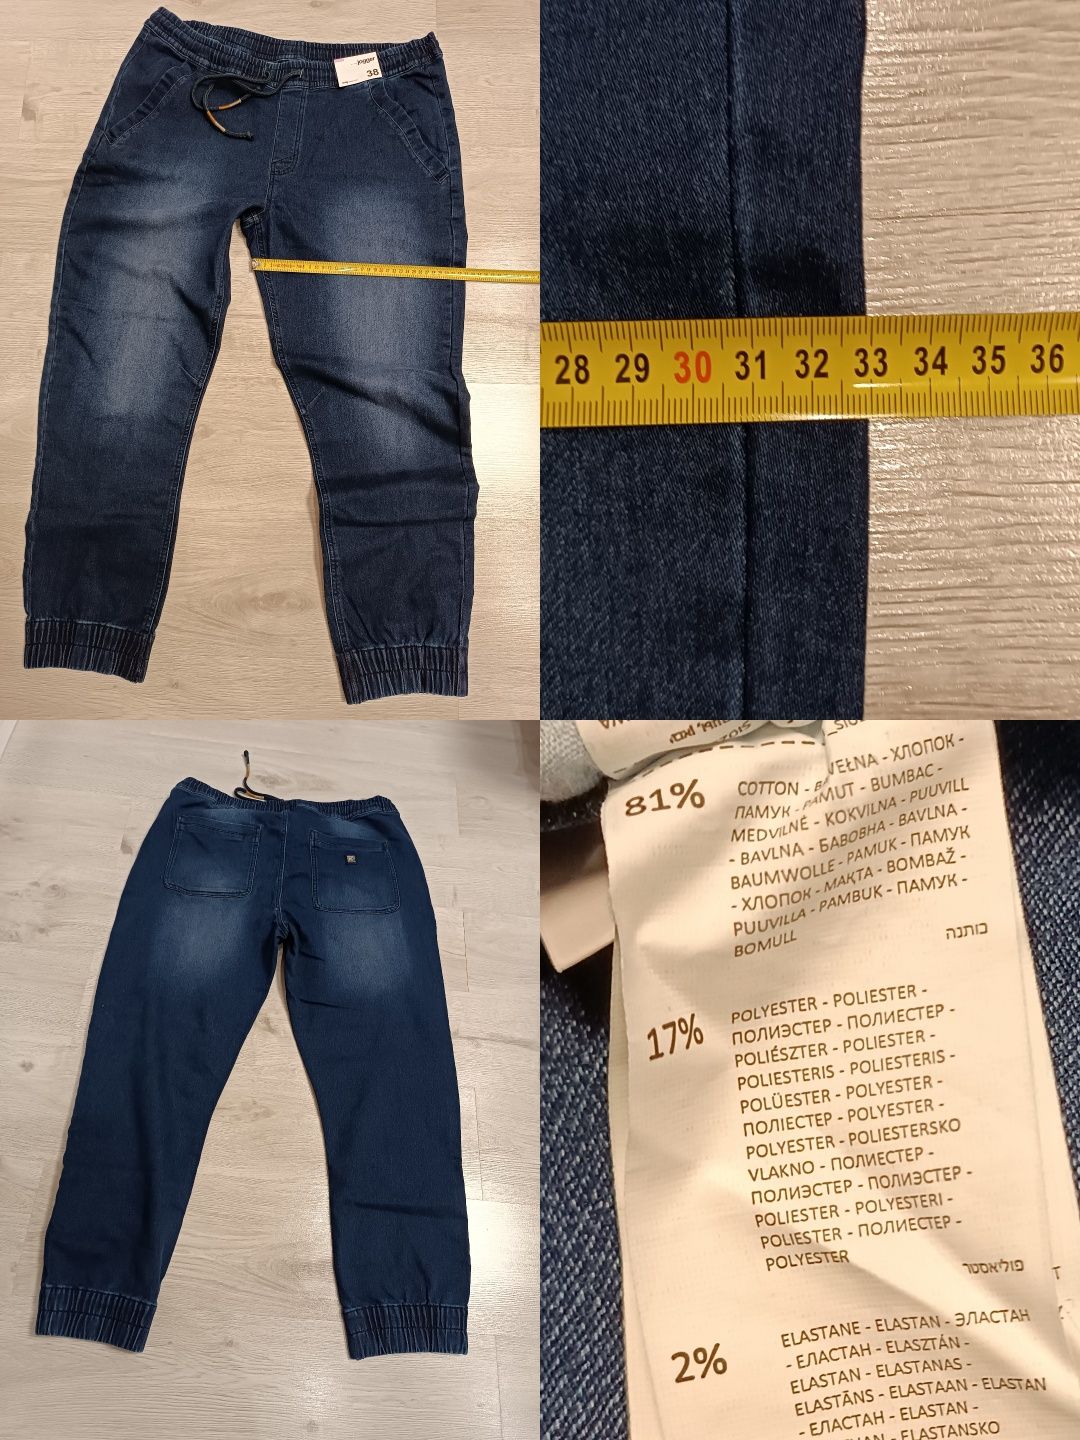 Jogerry jeansy spodnie męskie rozmiar 38